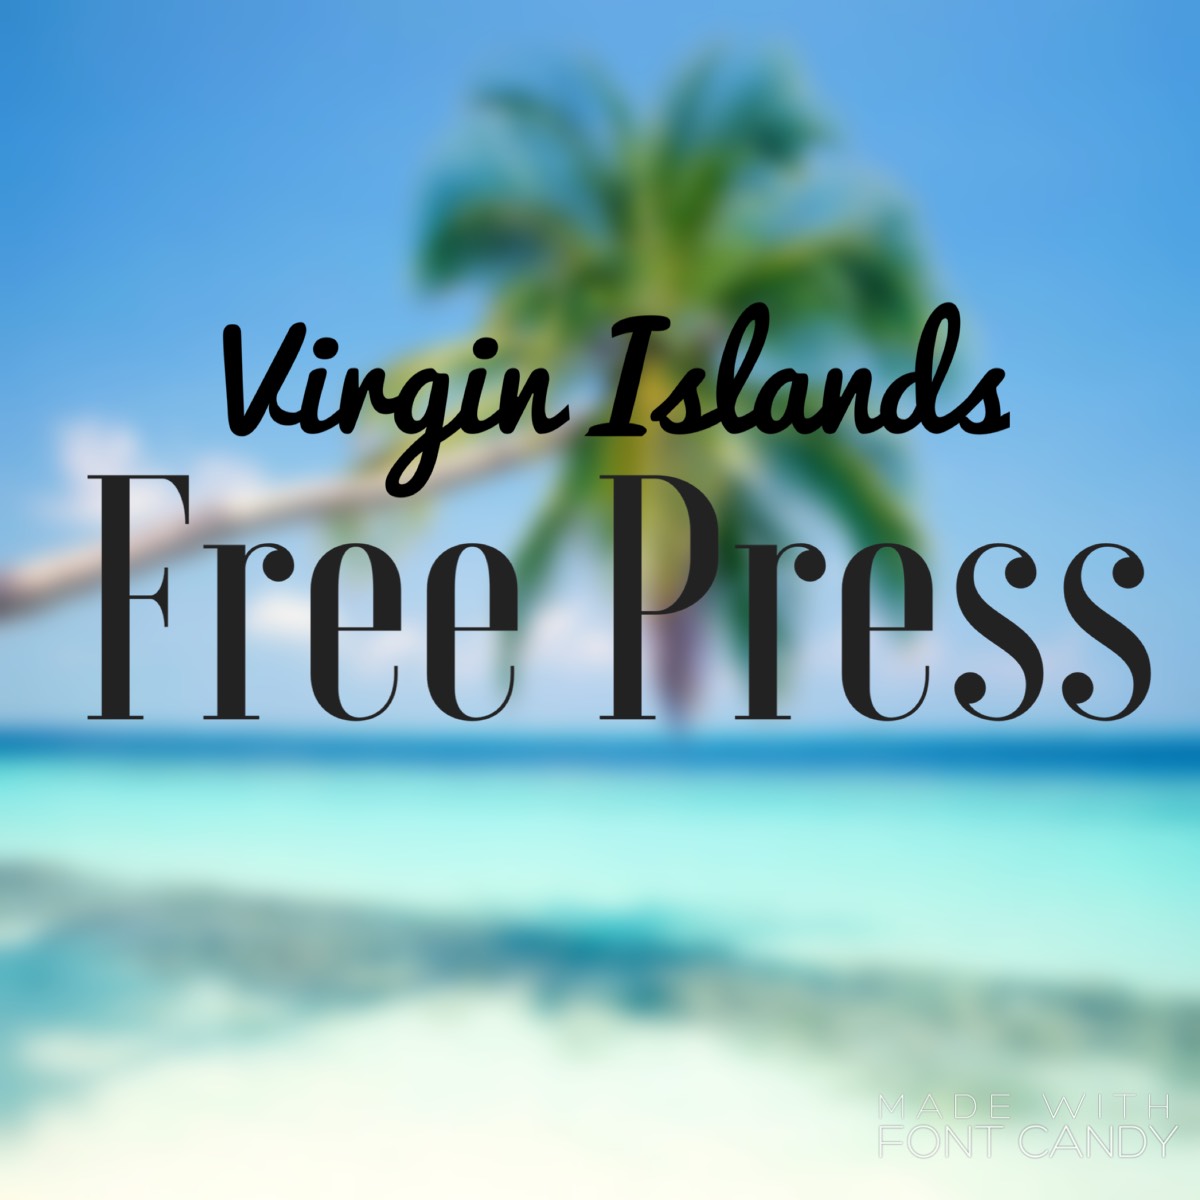 Virgin Islands Free Press